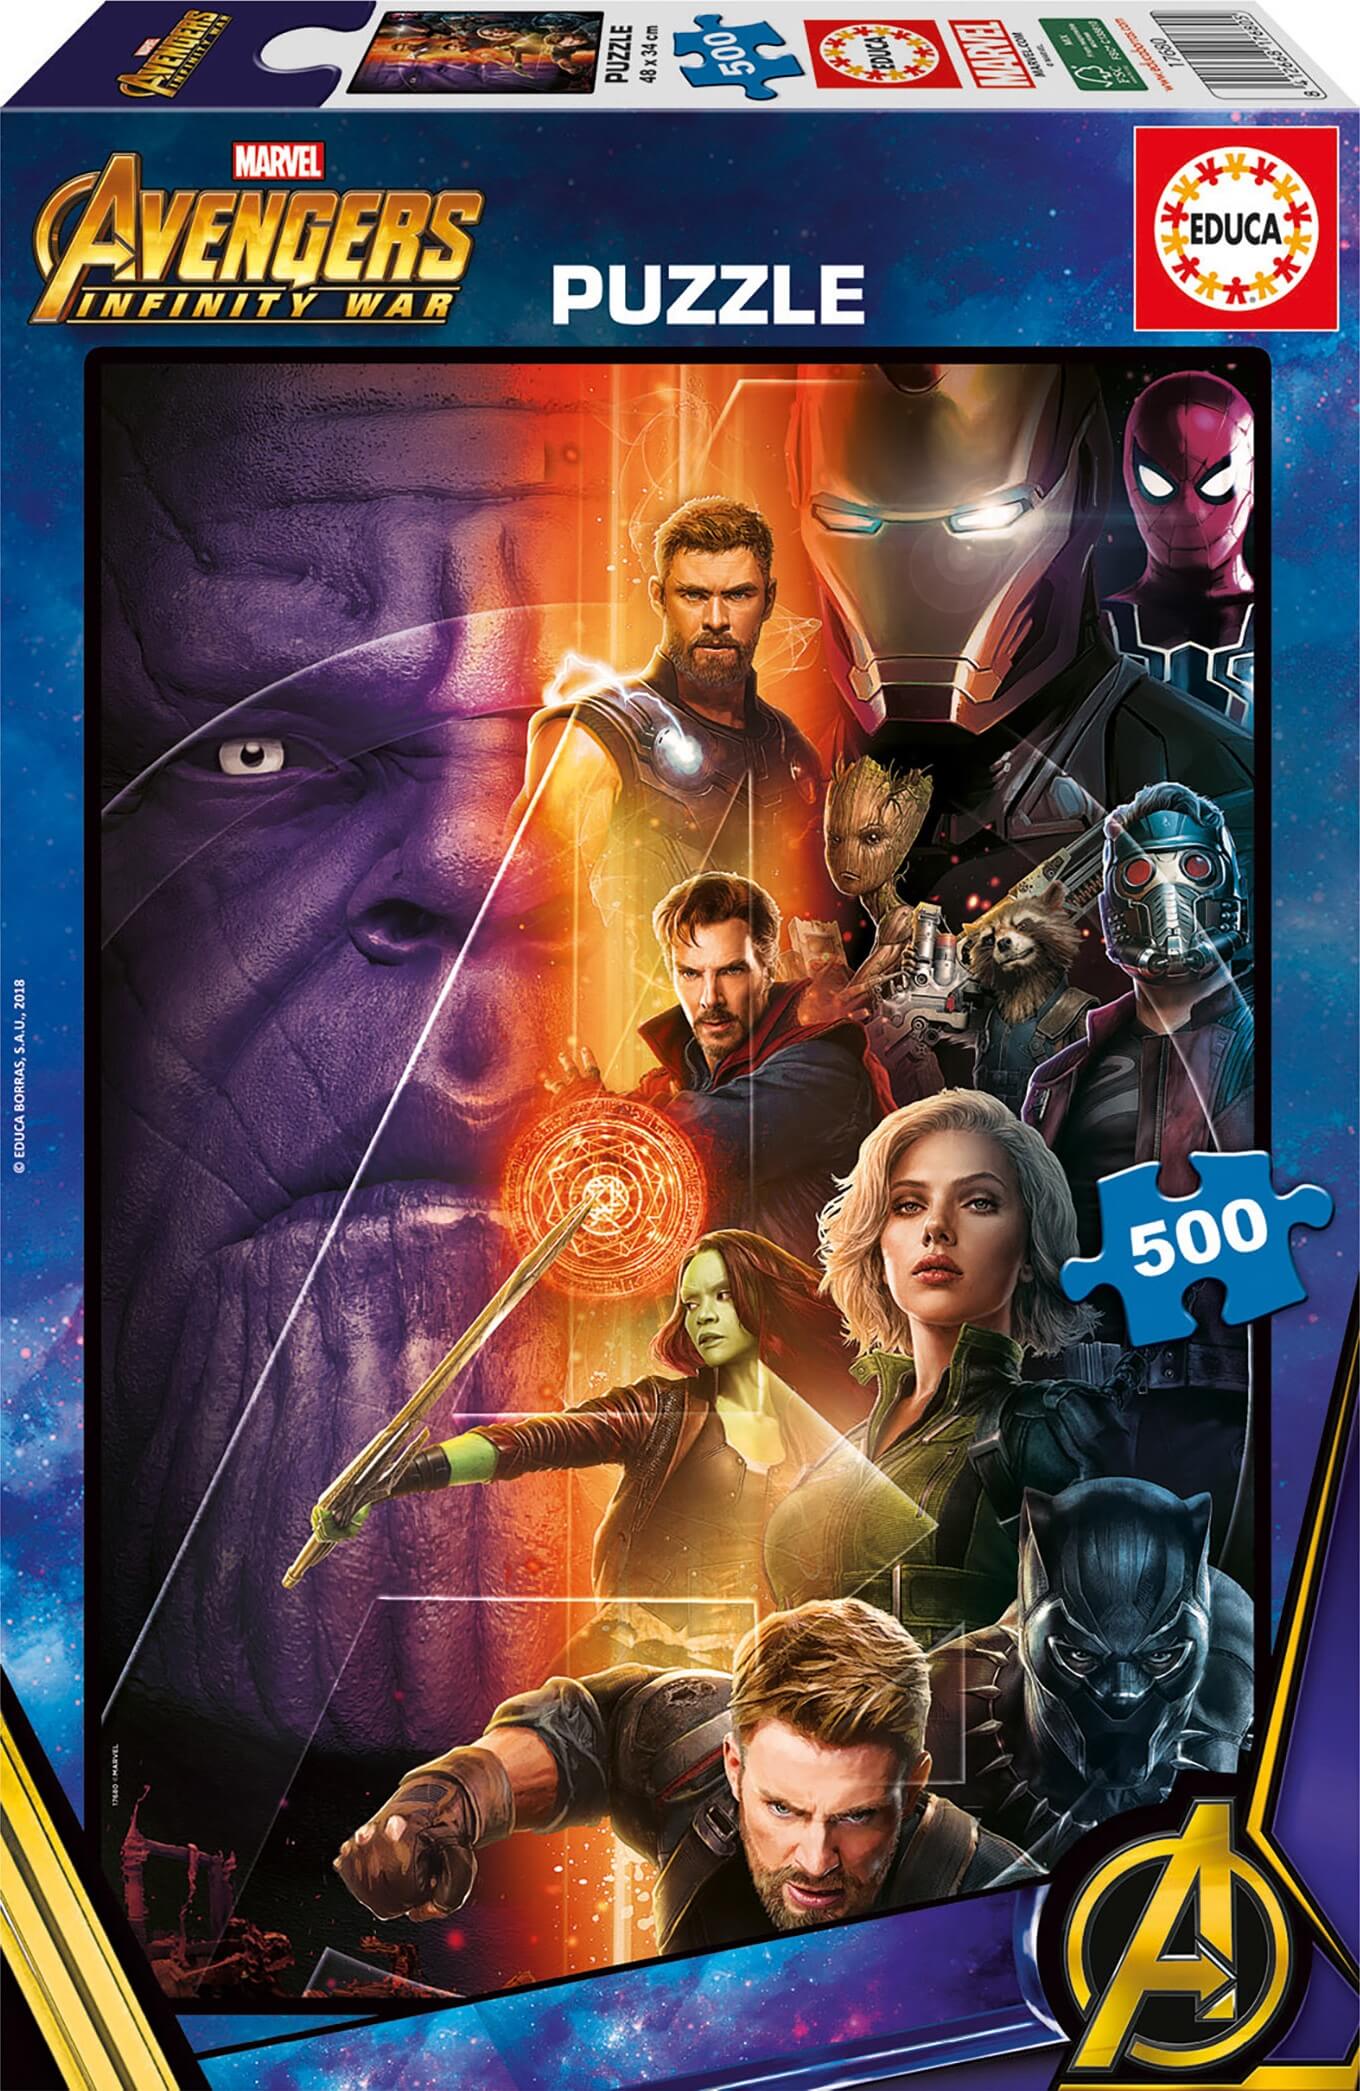 500 Avengers Infinity War